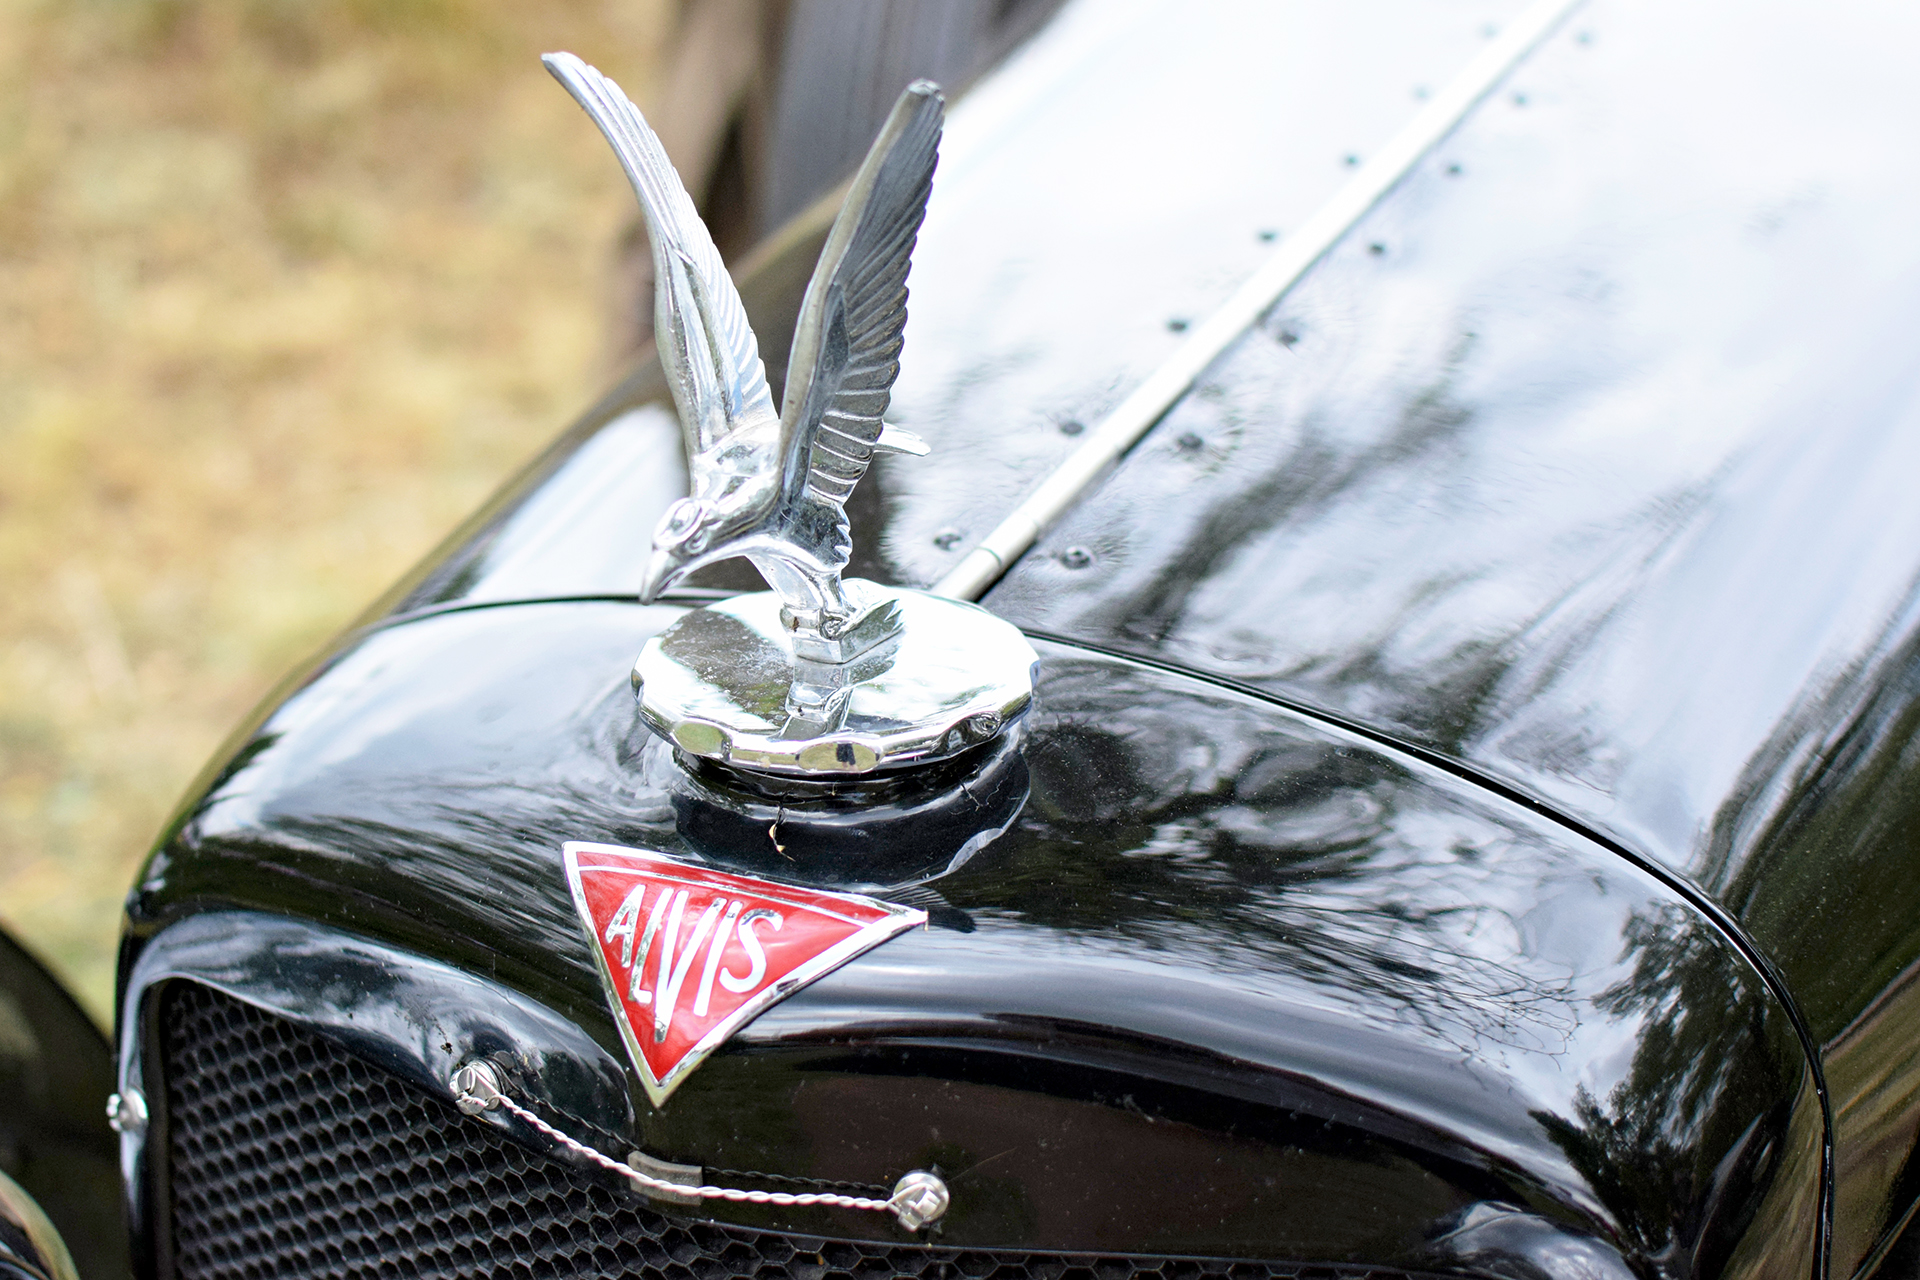 Alvis 12/70 roadster 1938 emblem - Automania 2017, Edling les Anzeling, Hara du Moulin